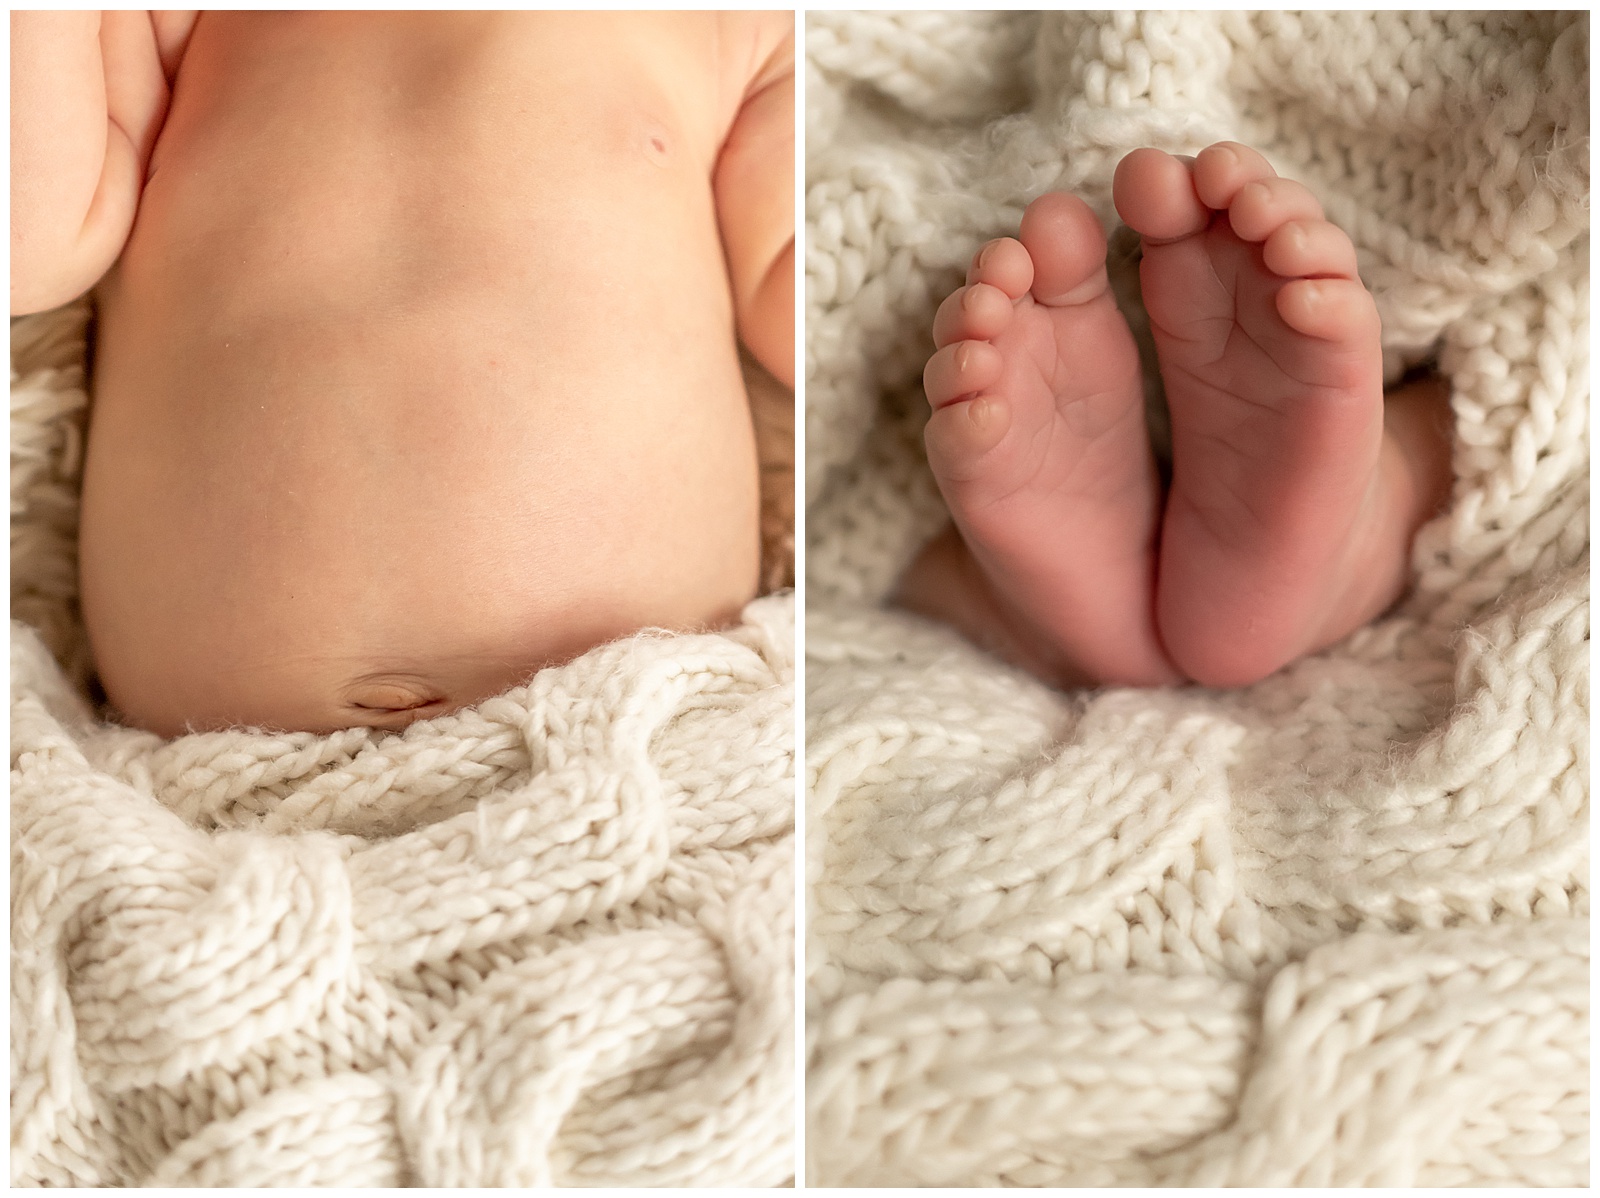 Lifestlye Newborn Portraits